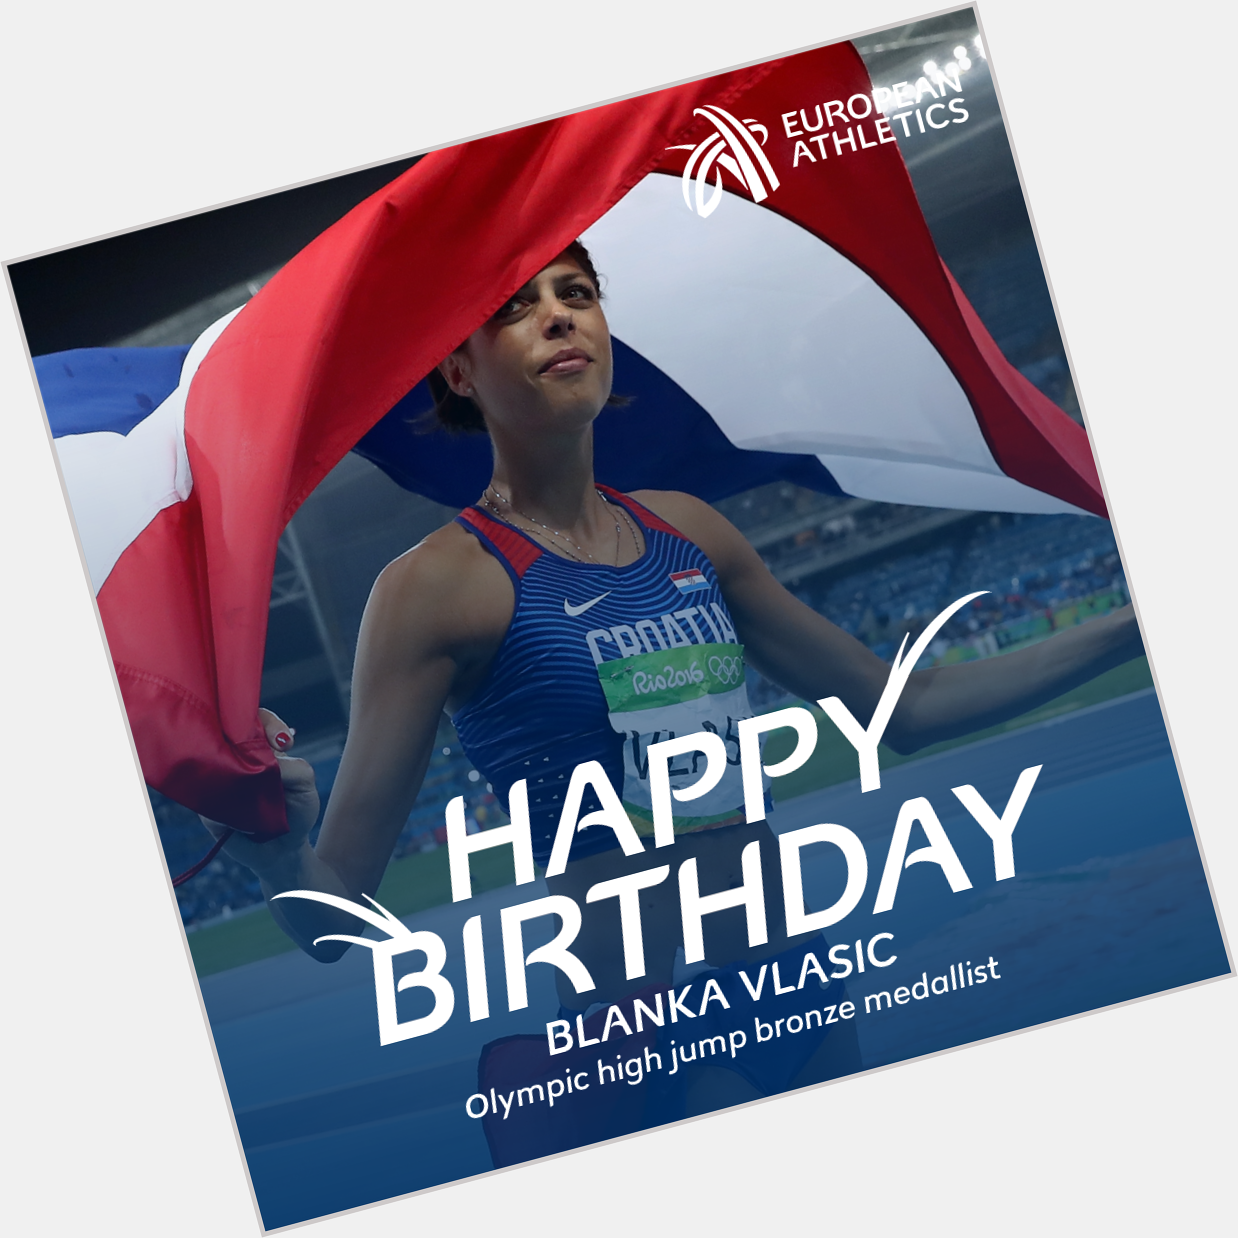 Happy birthday to Olympic high jump bronze medallist and 2007 and 2009 world champion Blanka Vlasic! 